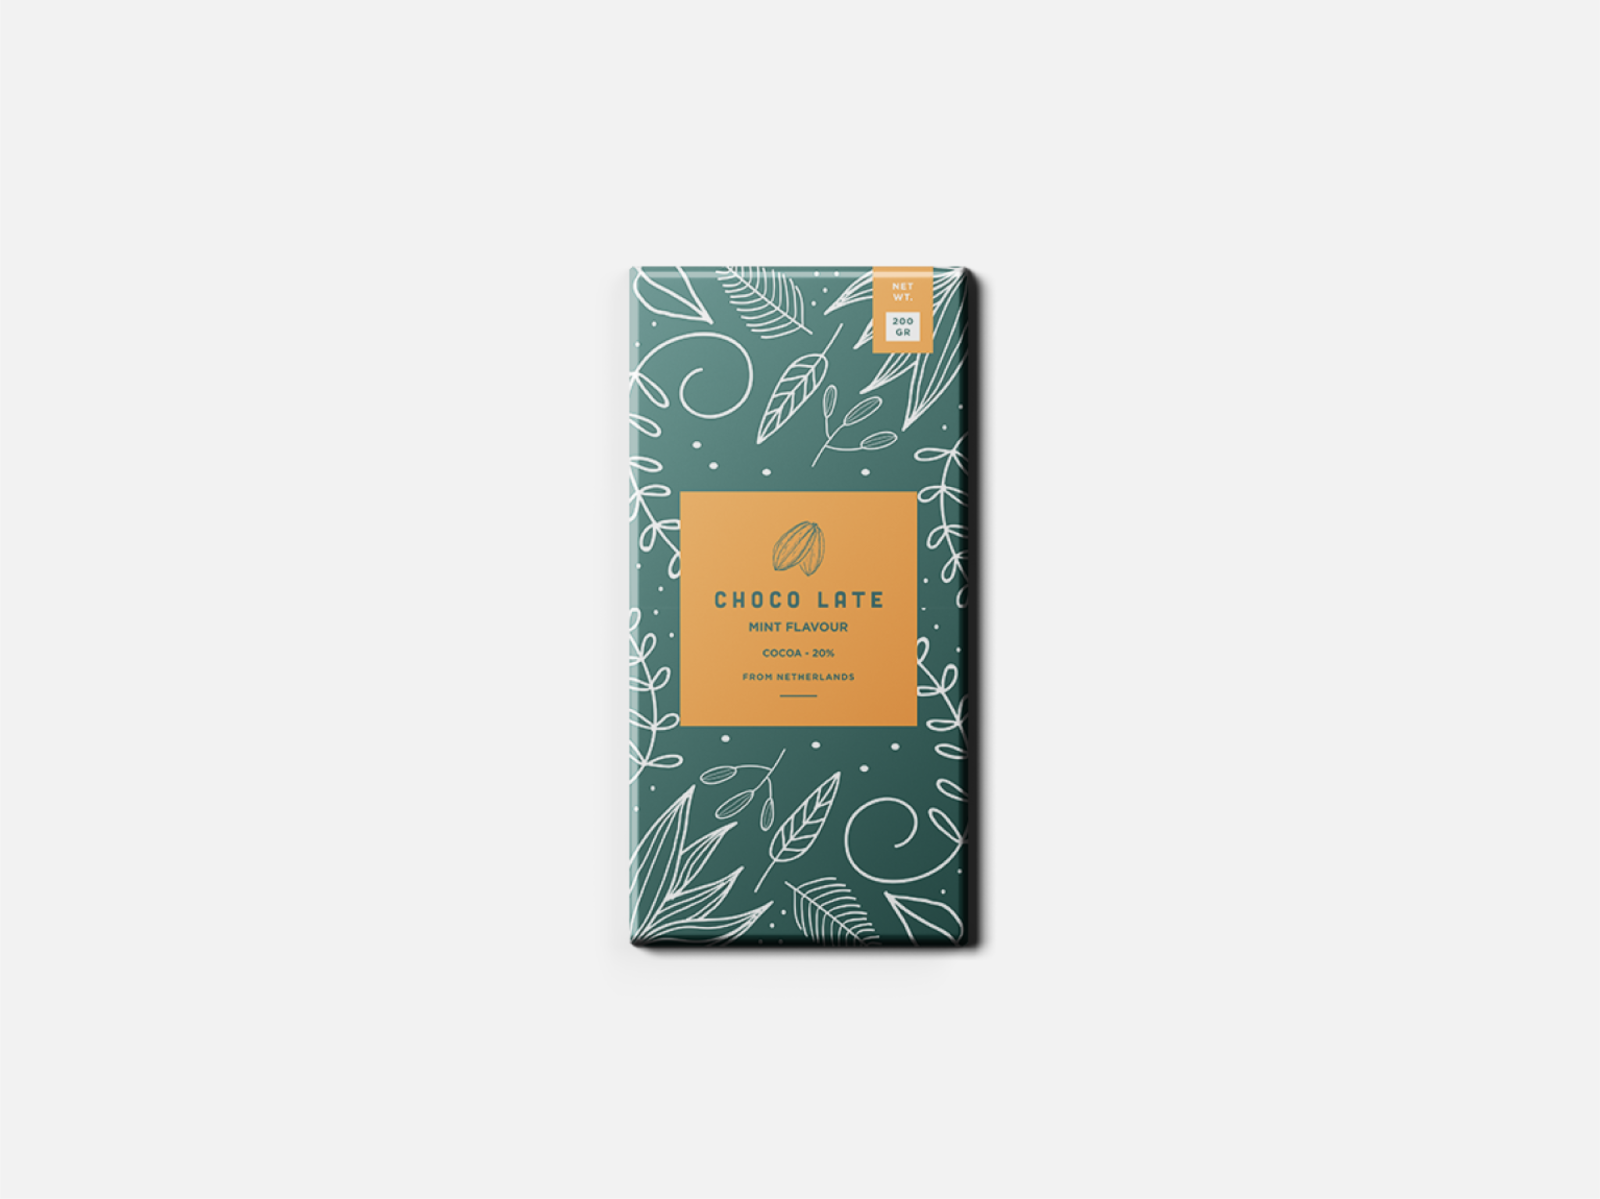 Chocolate packaging design. by Emir Kudic on Dribbble